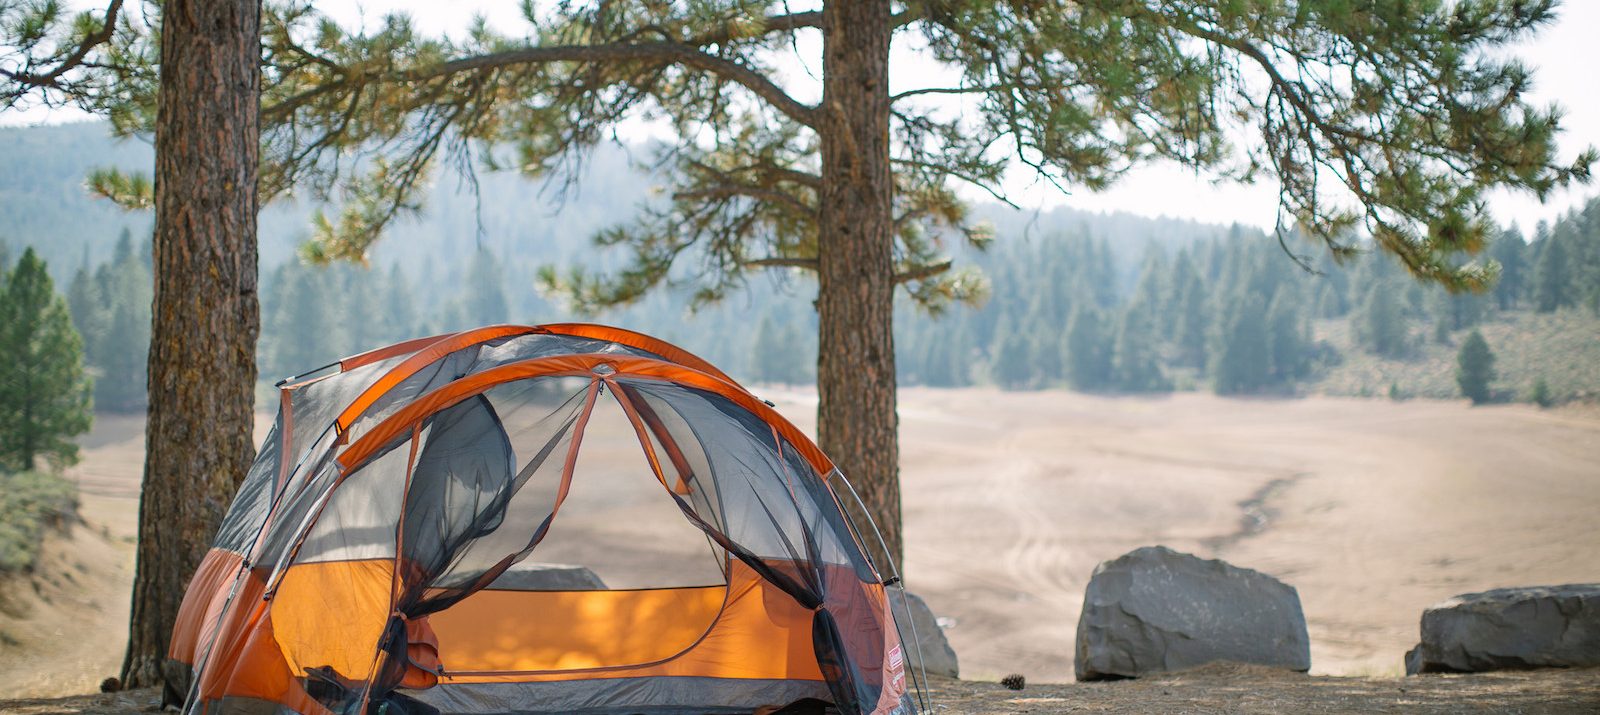 outdoor-tent-camping-woods